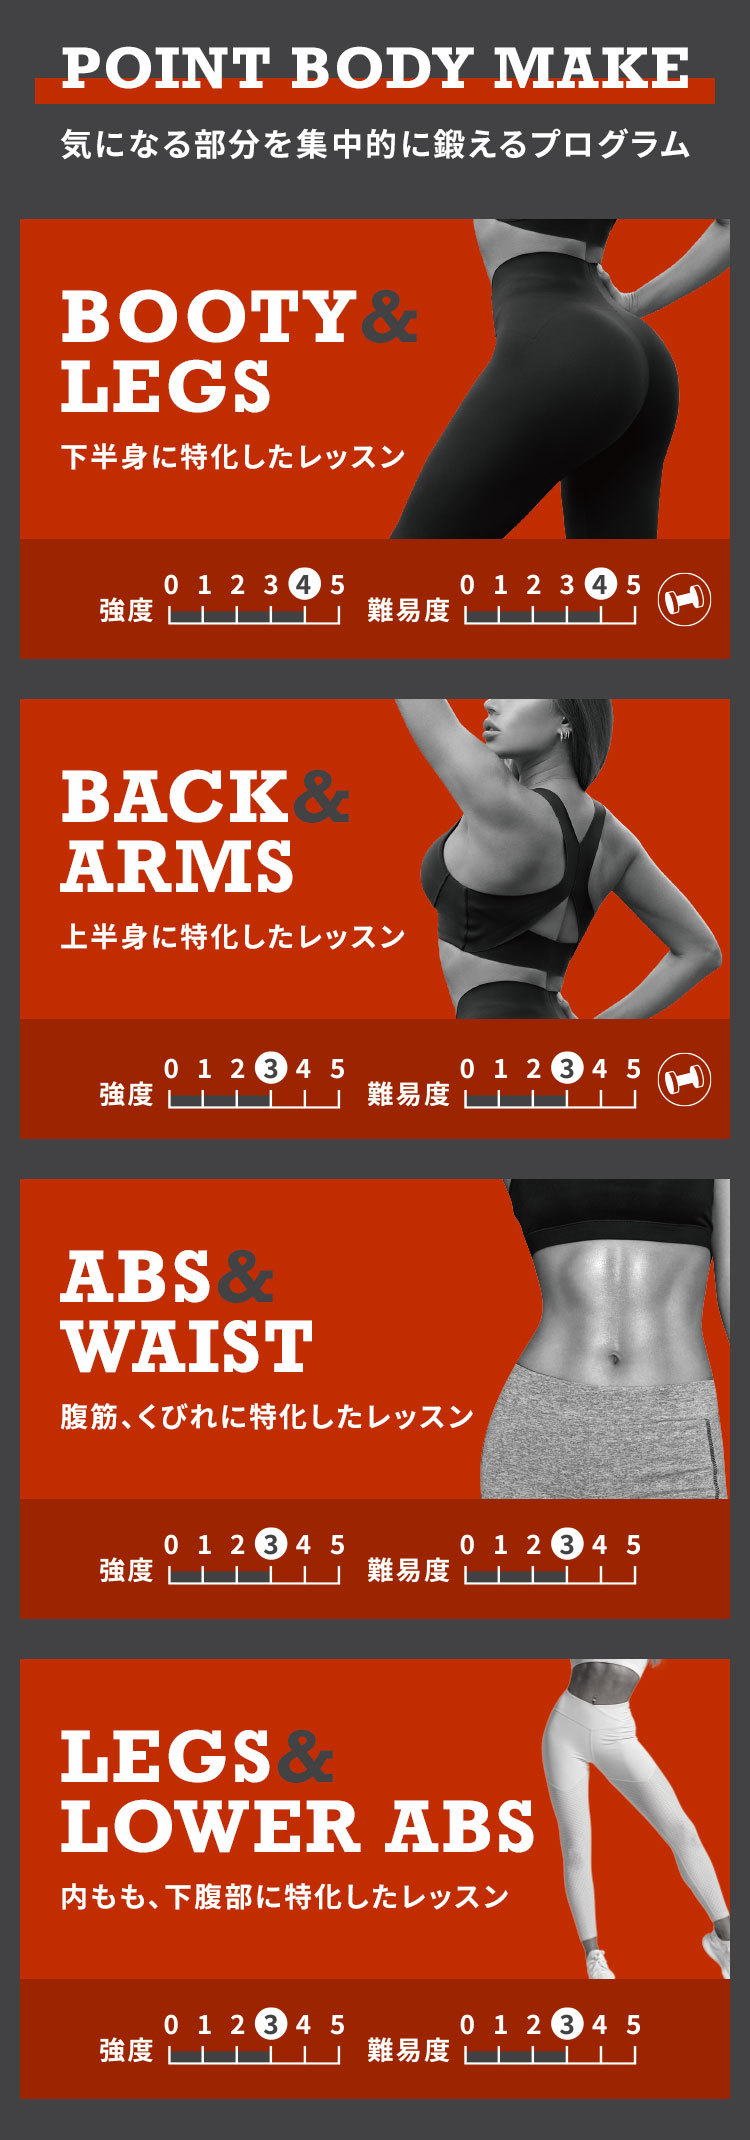 POINT BODY MAKE 気になる部分を集中的に鍛えるプログラム BOOTY&LEGS 下半身に特化したレッスン BACK&ARMS 上半身に特化したレッスン ABS&WAIST 腹筋、くびれに特化したレッスン LEGS&LOWER ABS 内もも、下腹部に特化したレッスン